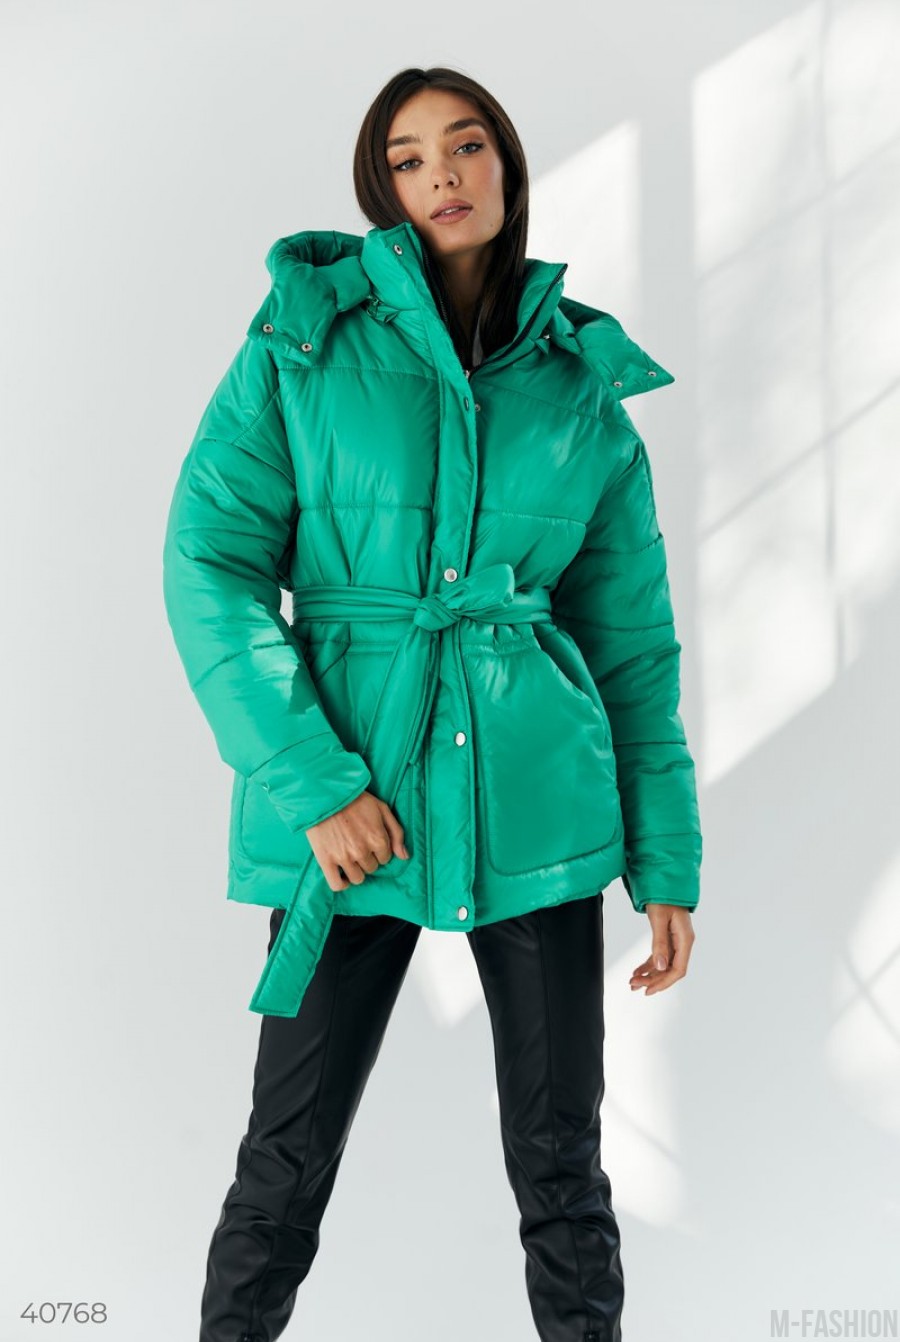 Теплая куртка яркого зеленого цвета - Фото 1